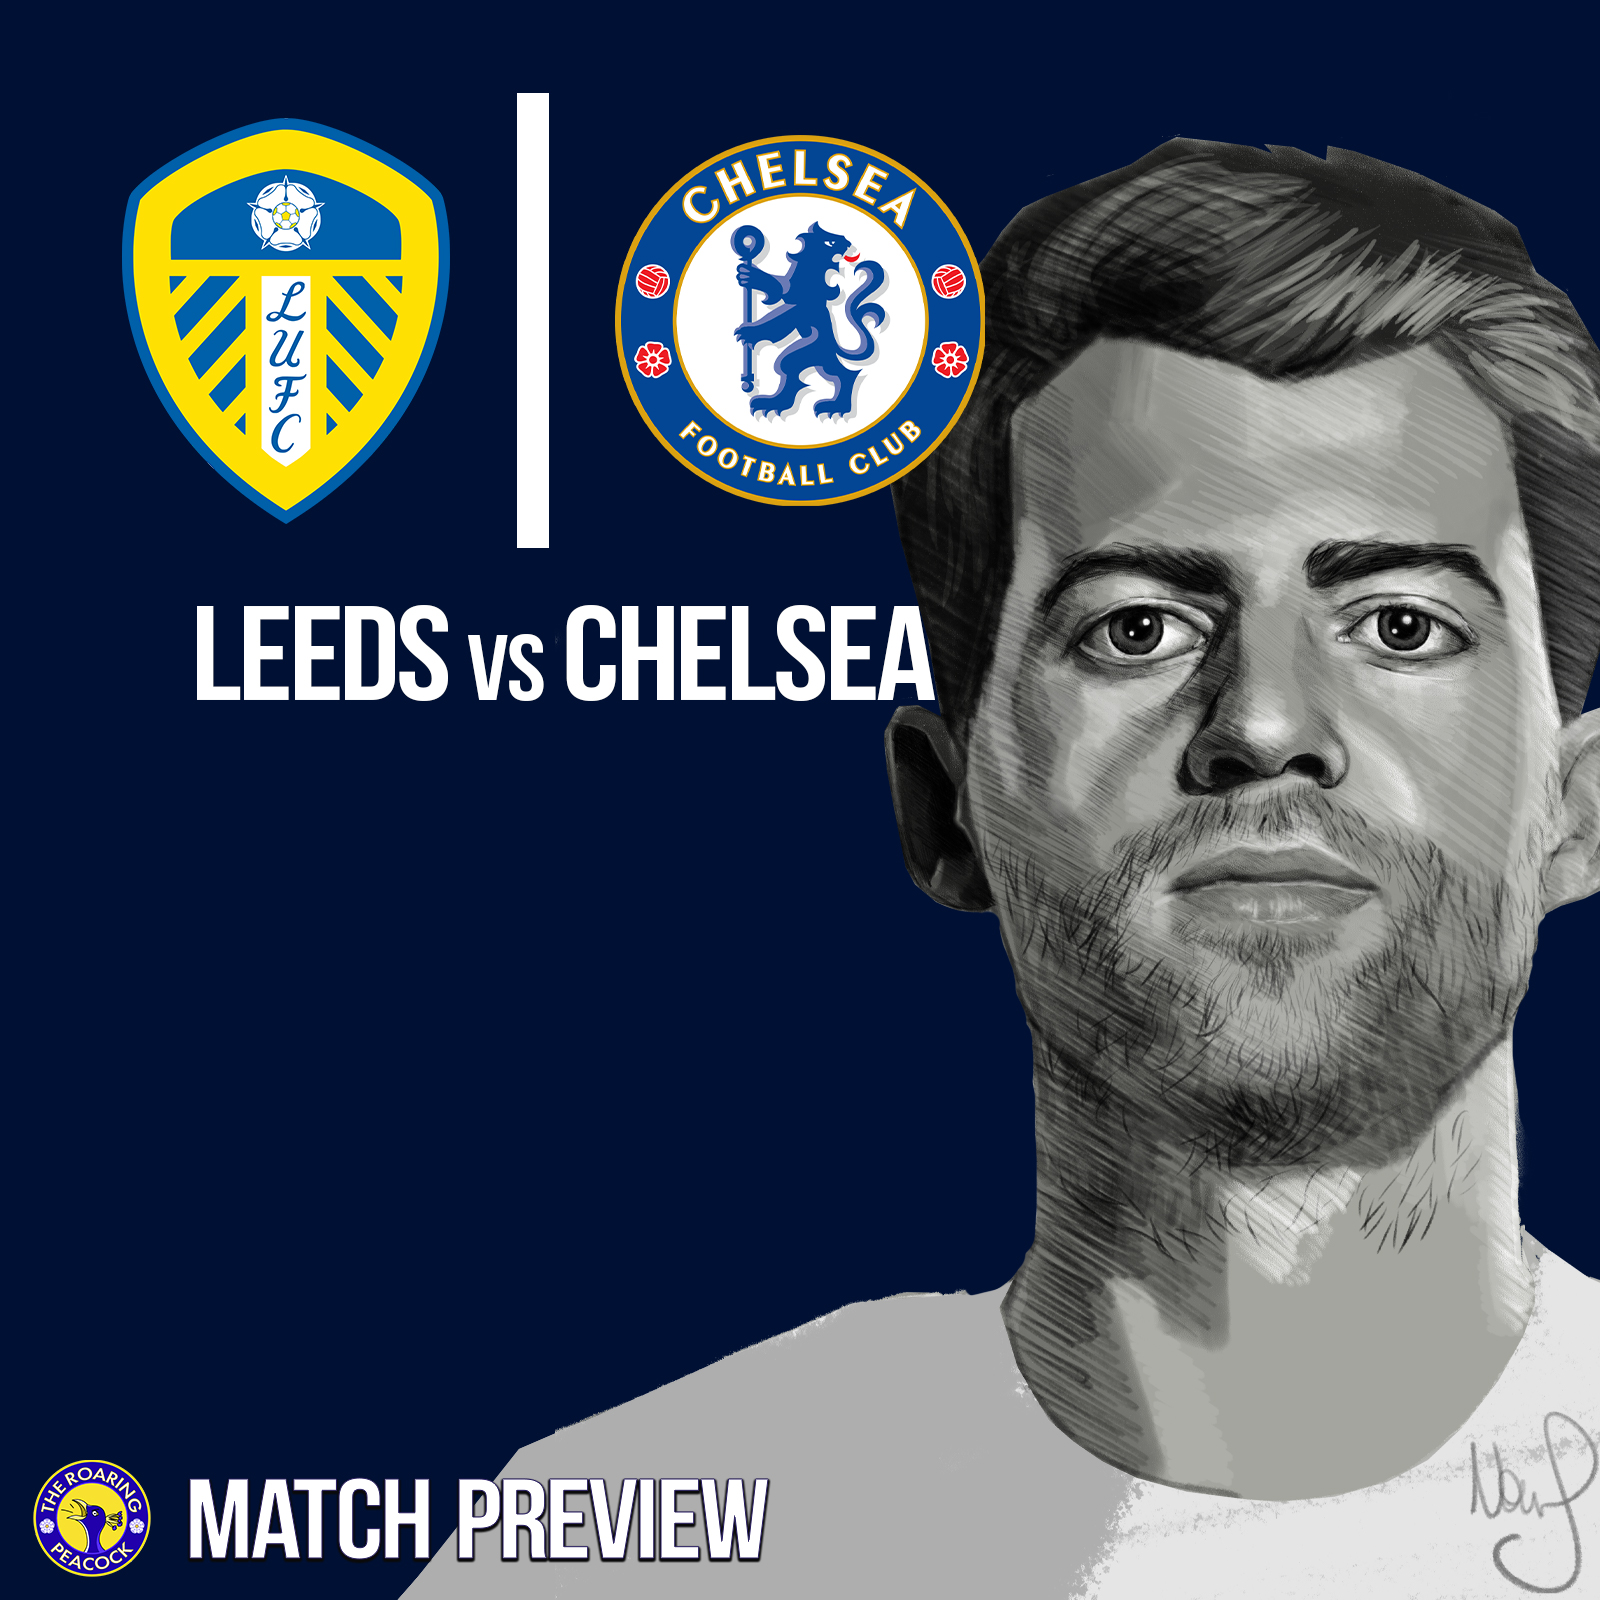 Leeds vs Chelsea Match Preview